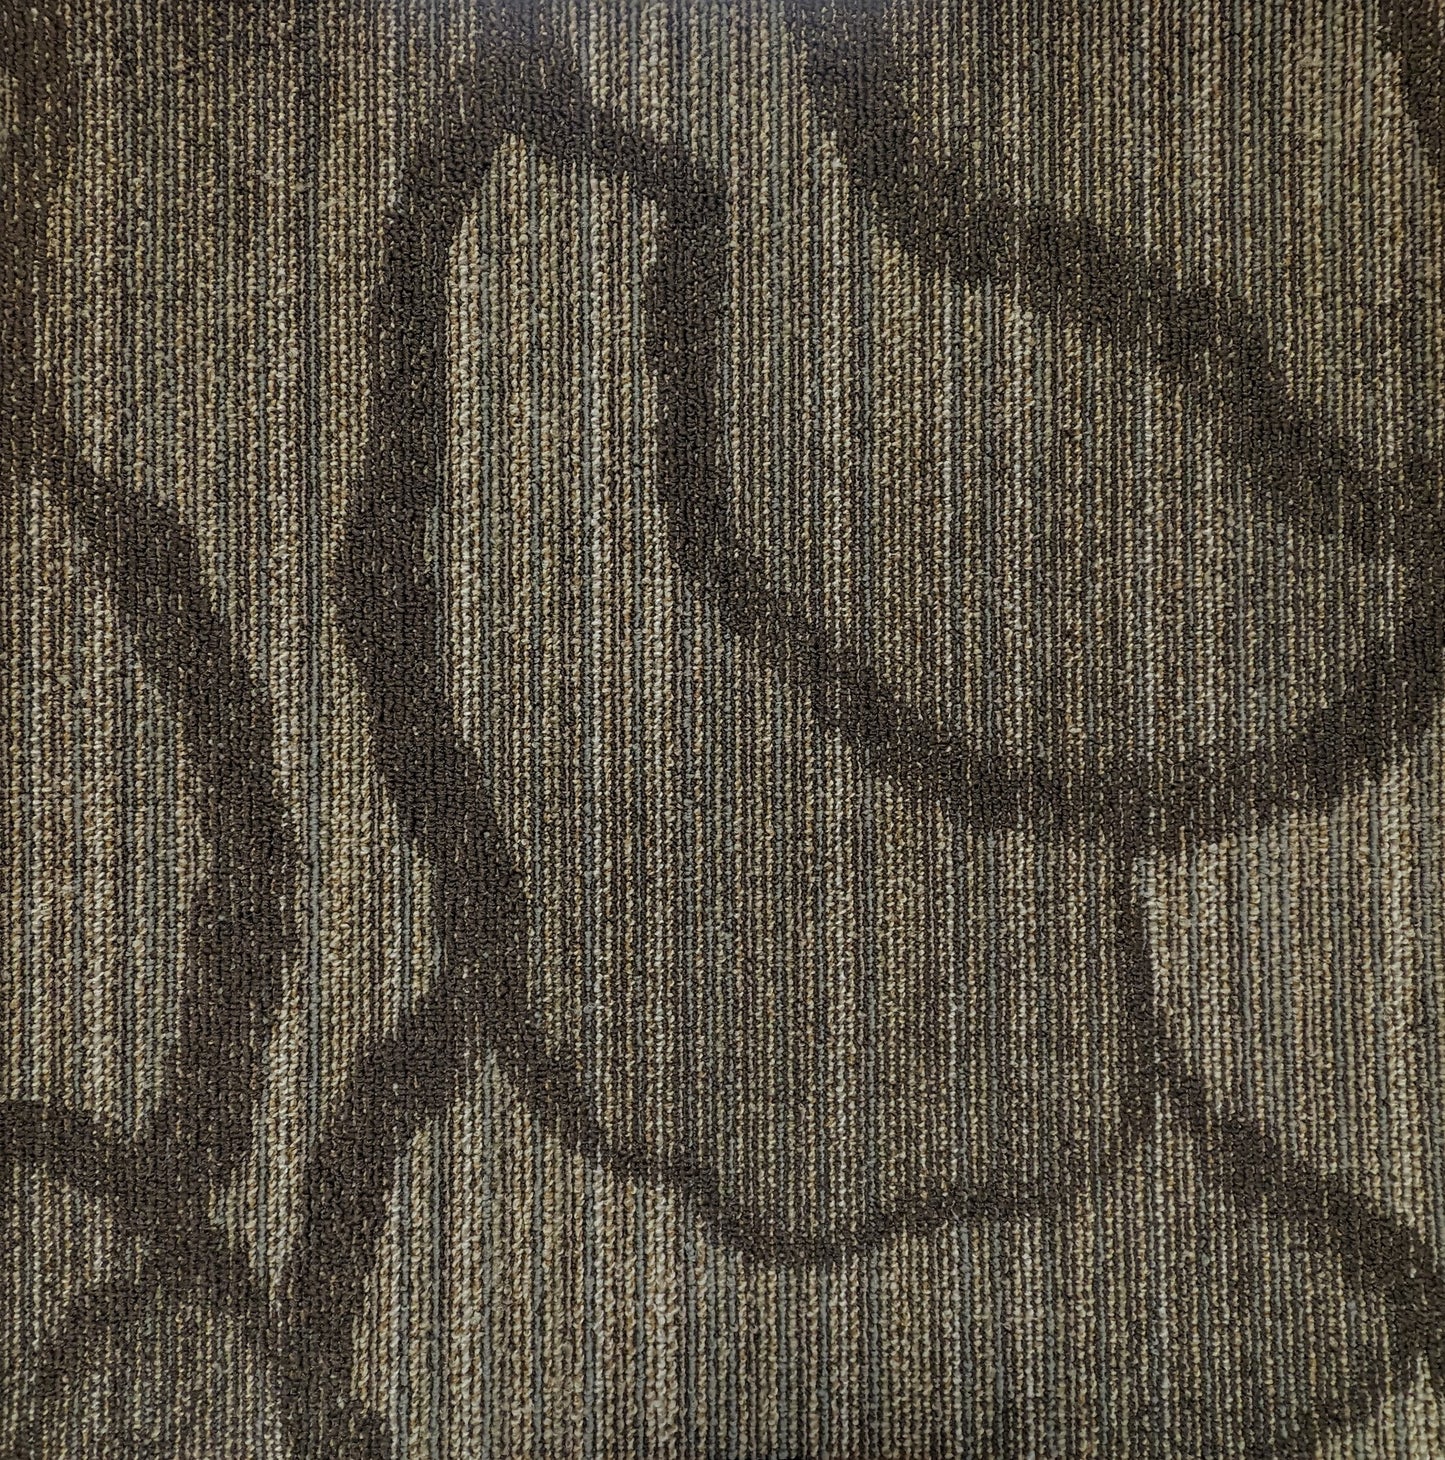 Shaw Fly Away Carpet Tile-24"x 24"(12 Tiles/case, 48 sq. ft./case)